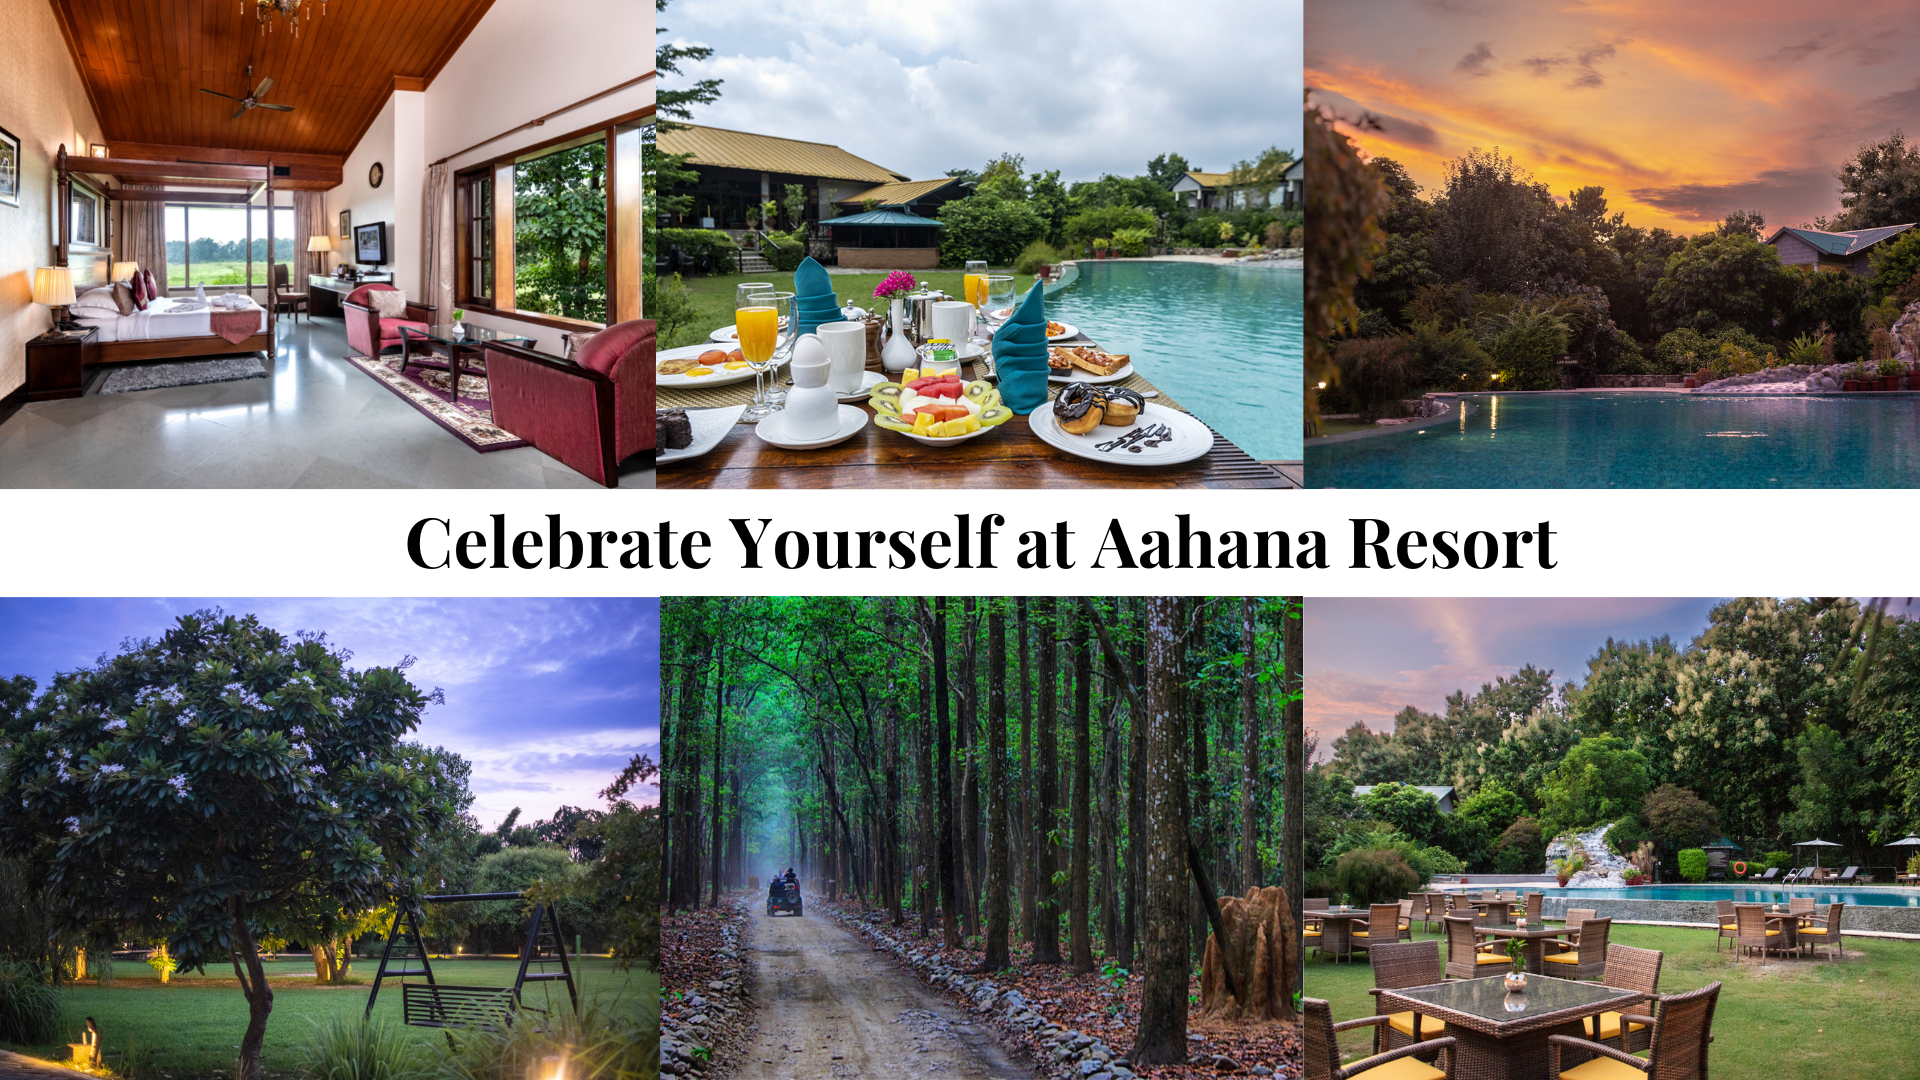 Celebrate yourself at Aahana